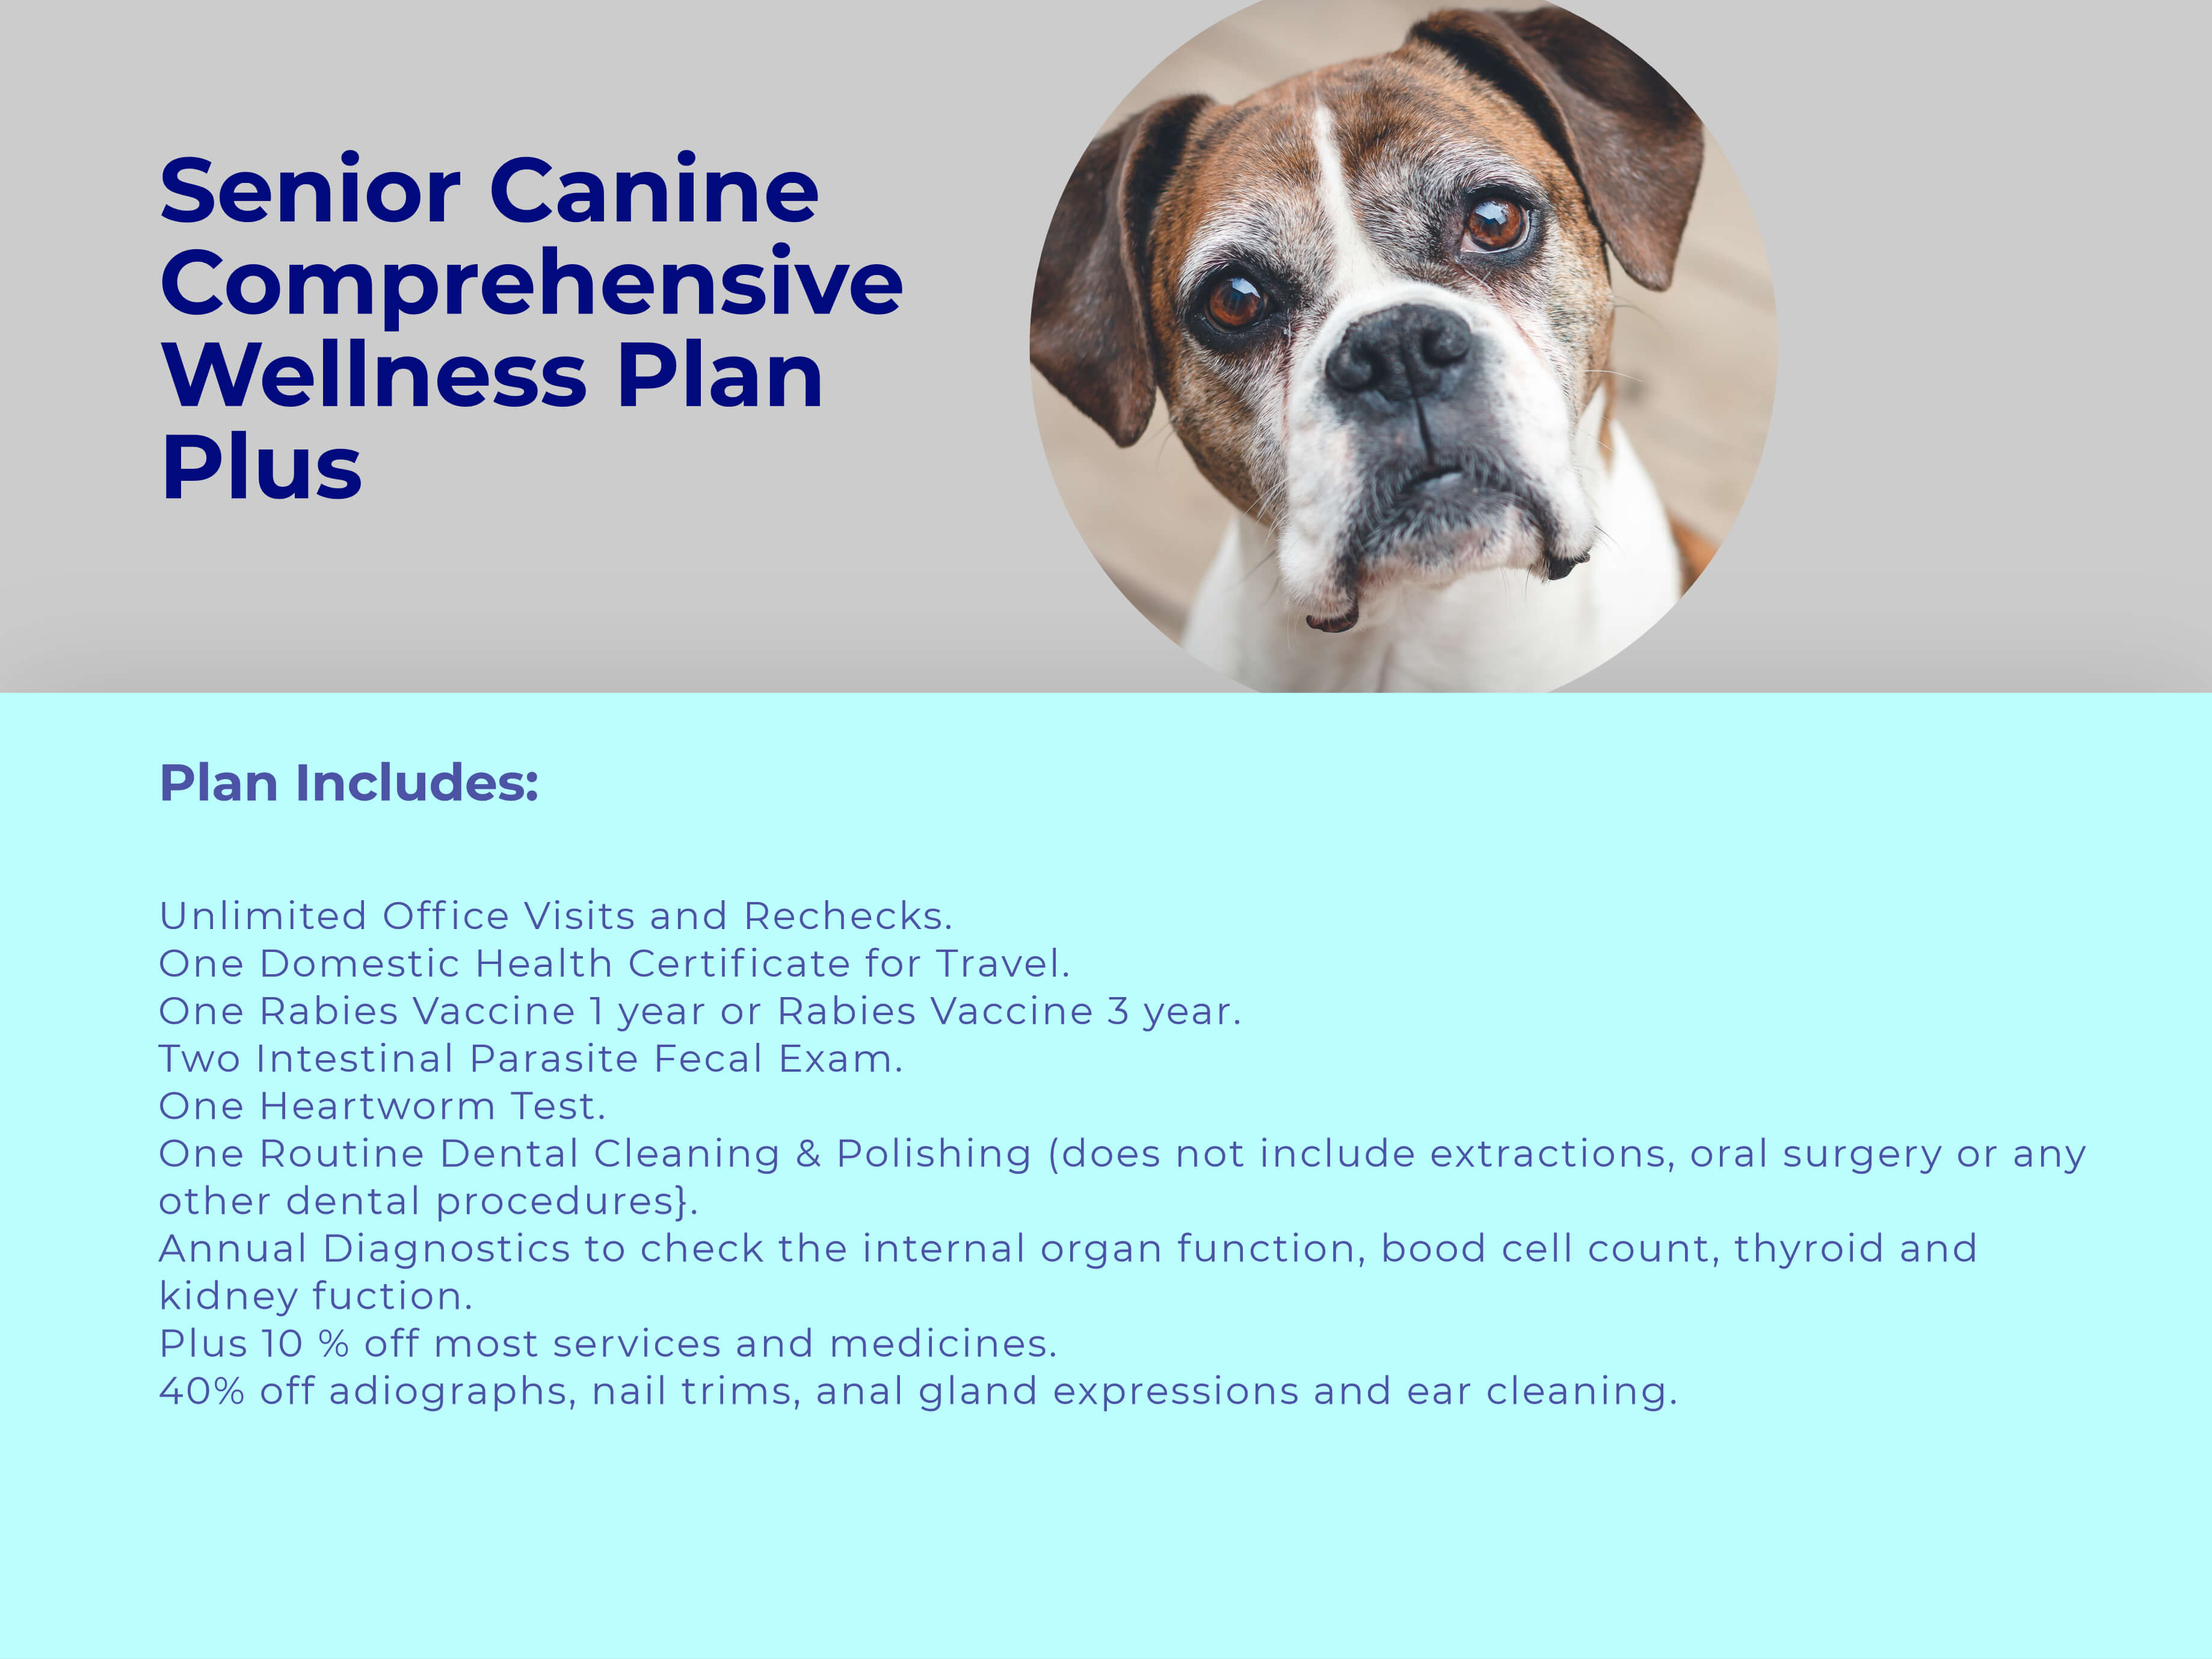 Senior Dog PLUS Comprehensive Wellness Plan at animal wellness clinic